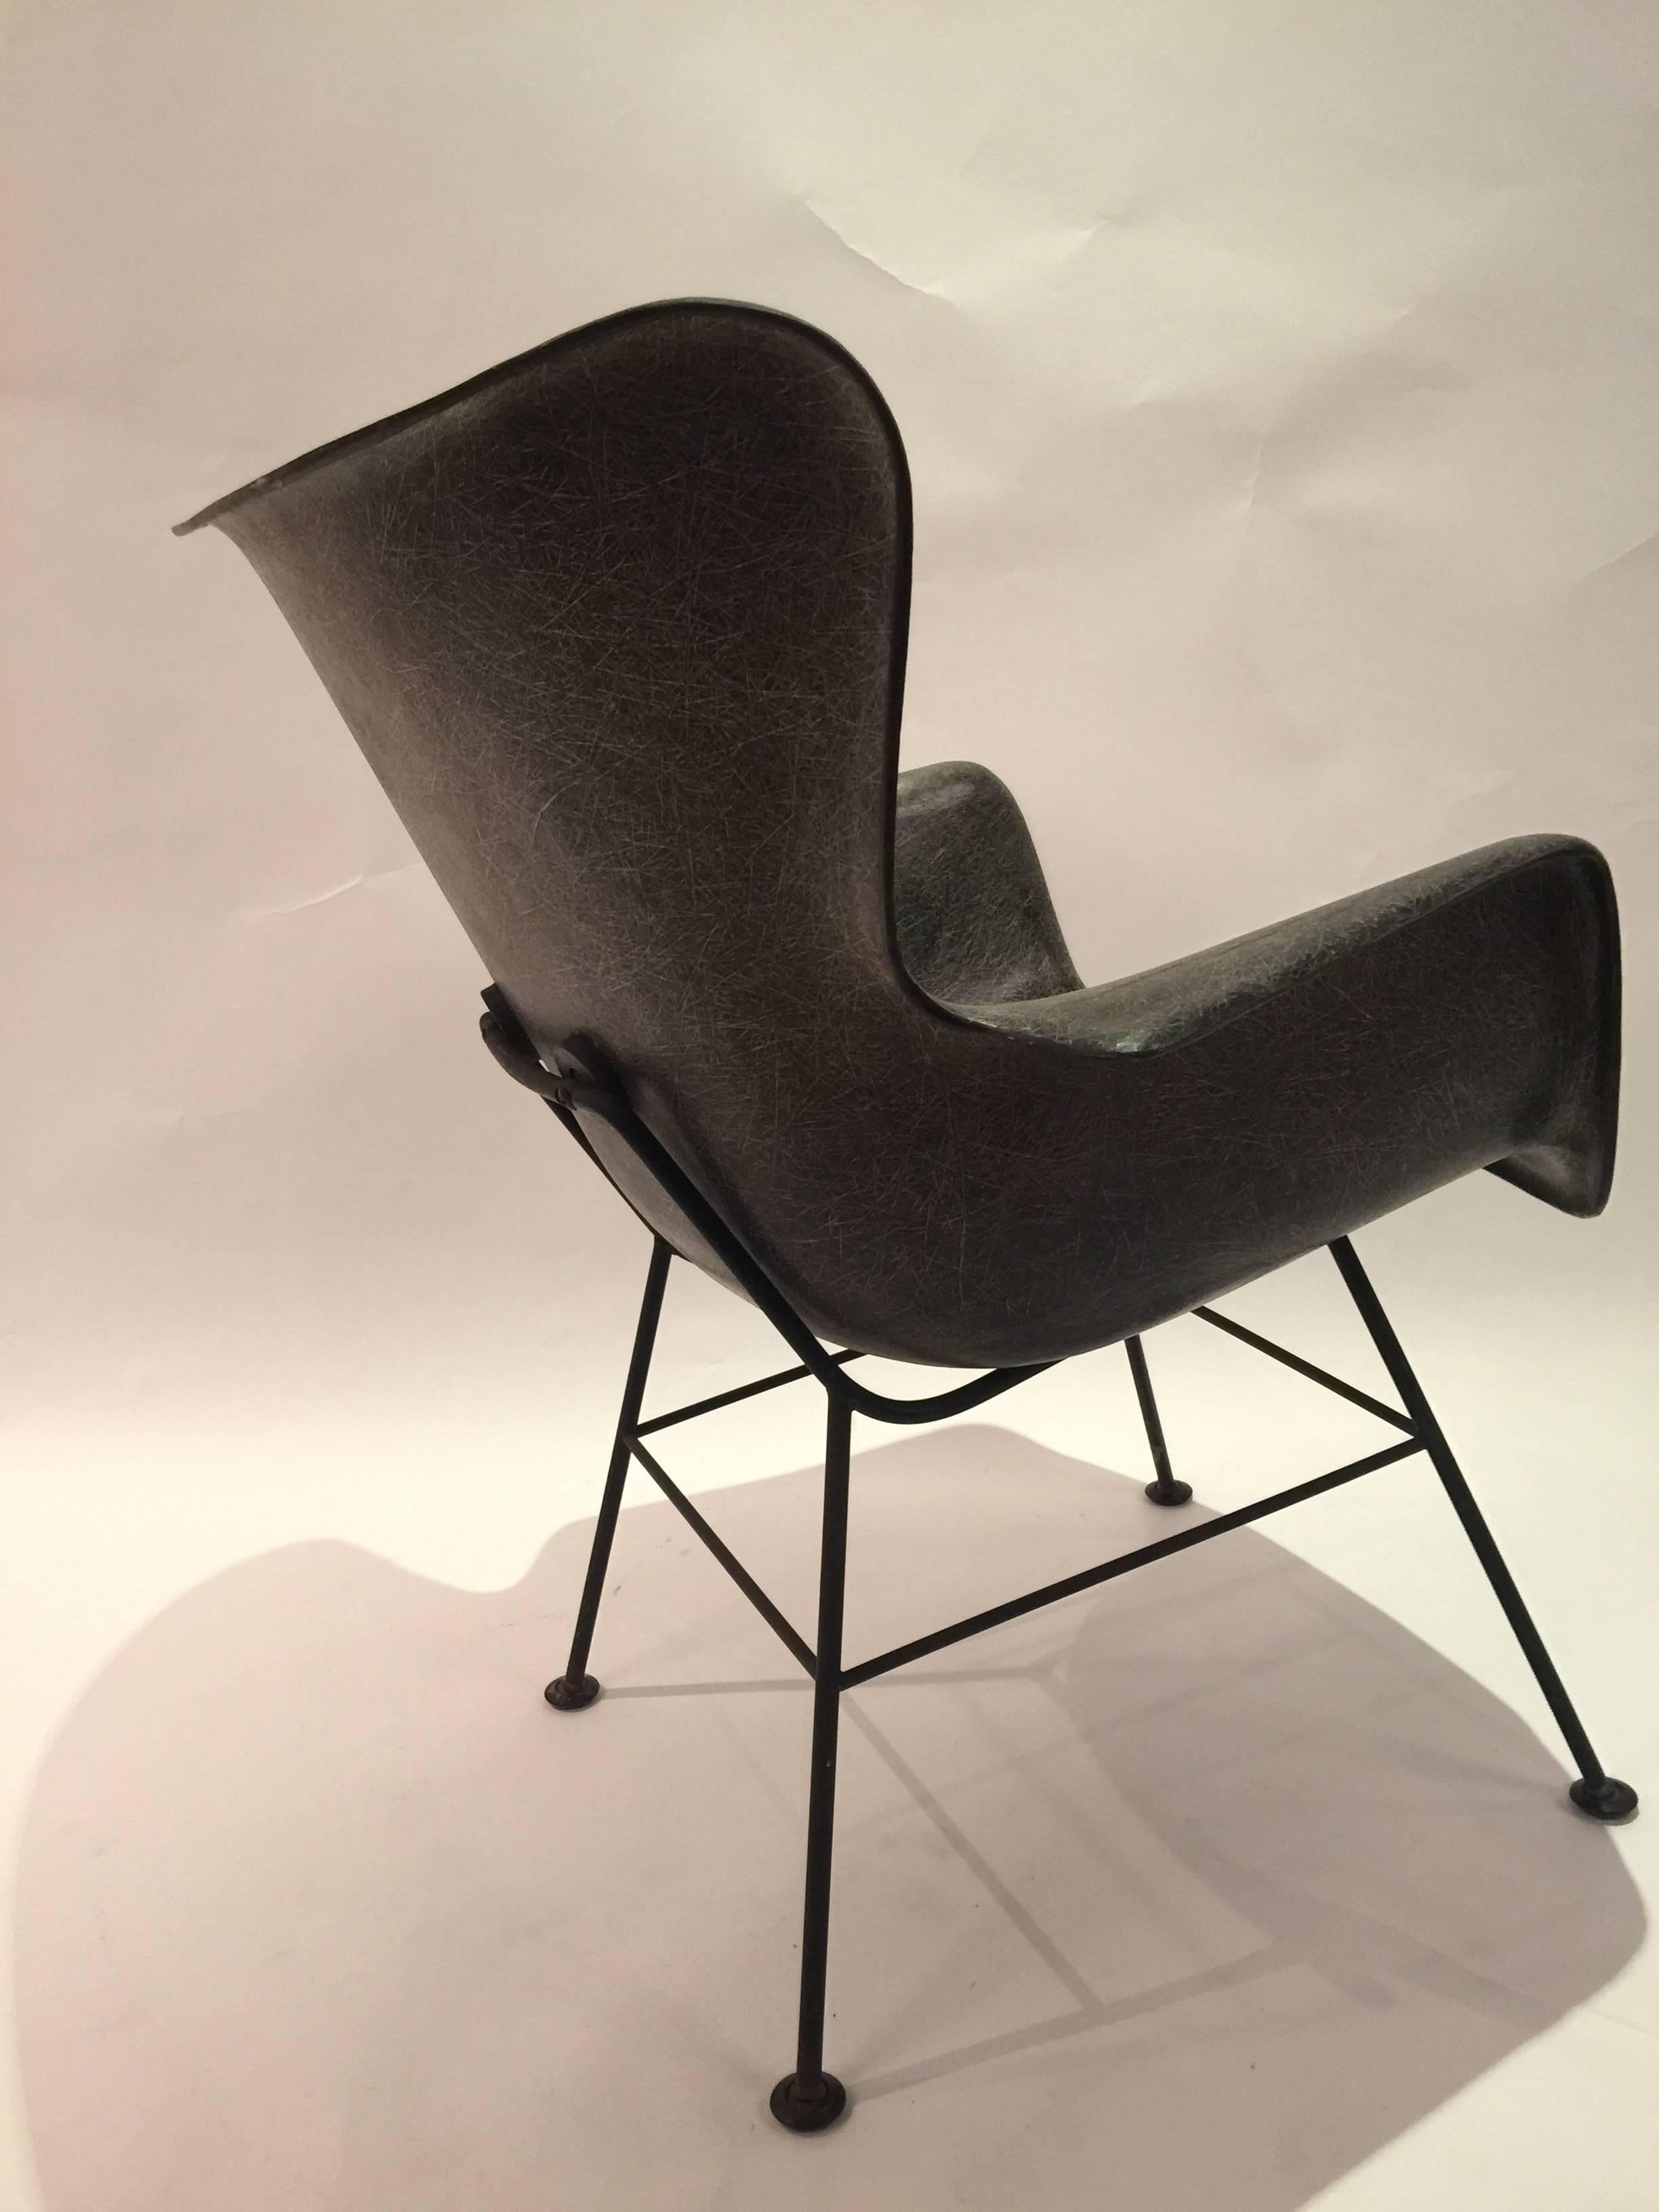 fiberglass chairs for sale